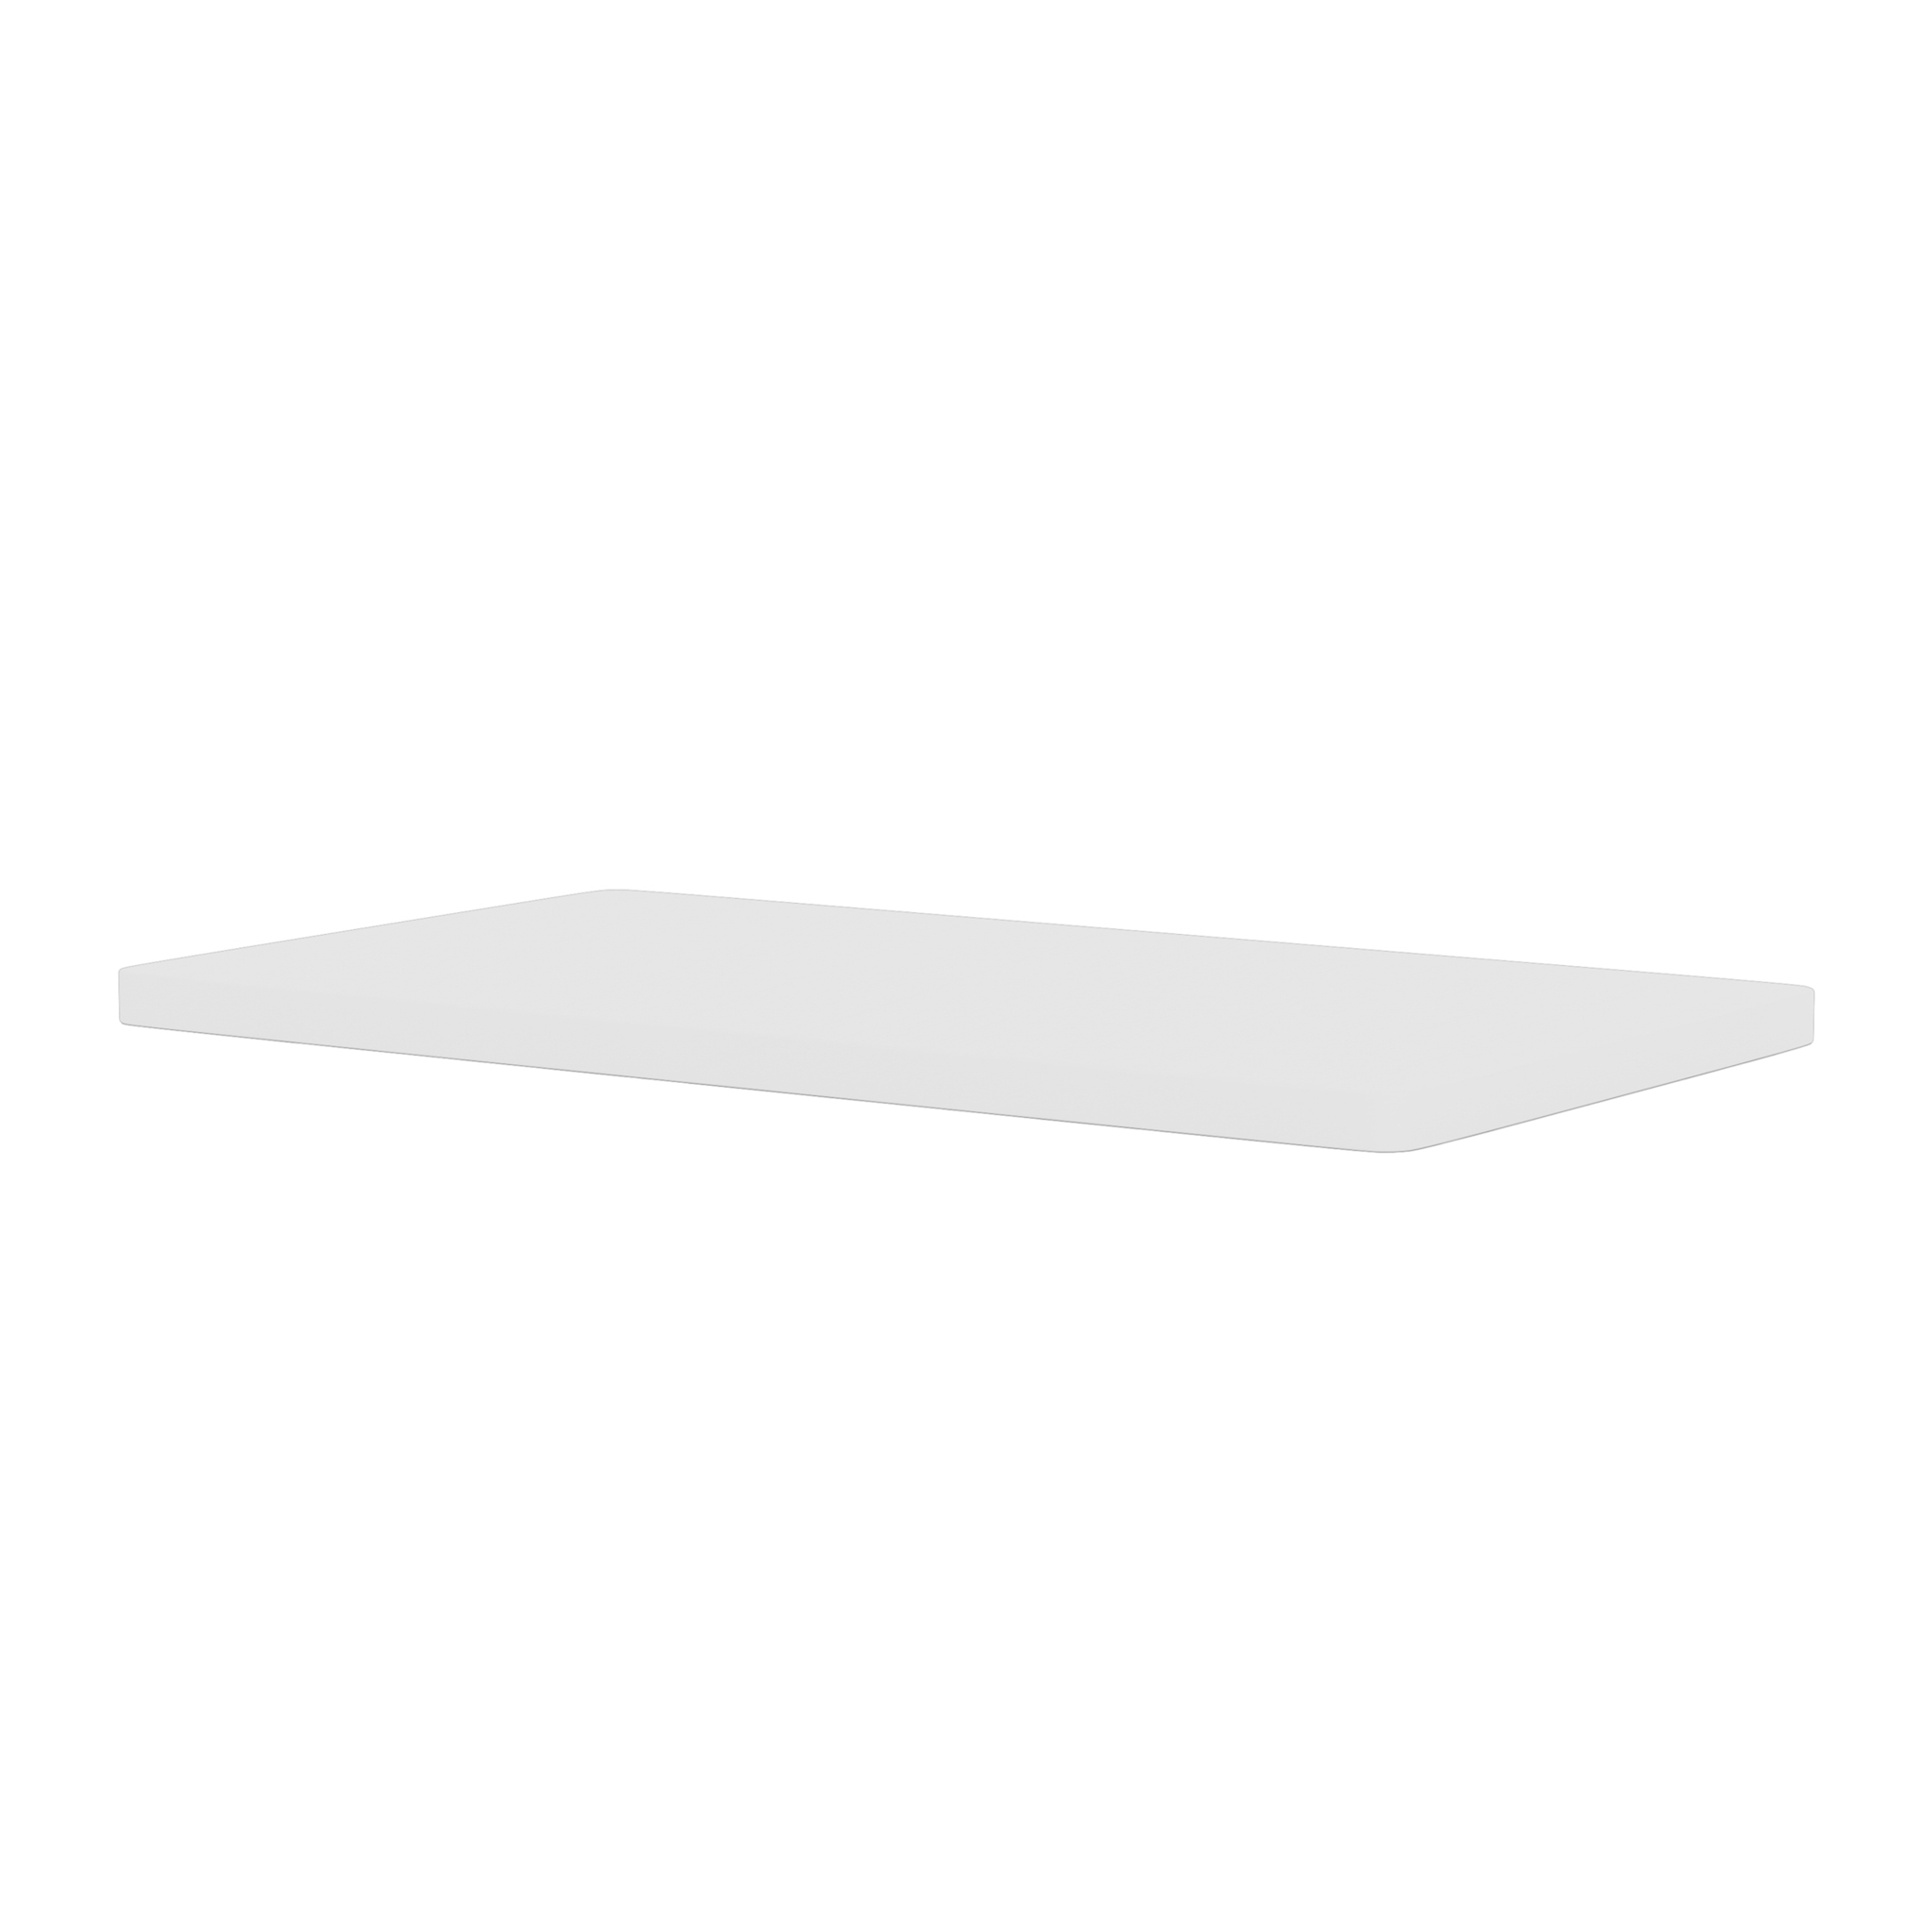 MONTANA // PANTON WIRE SINGLE EINLEGEBODEN - TIEFE 19cm | 101 NEW WHITE